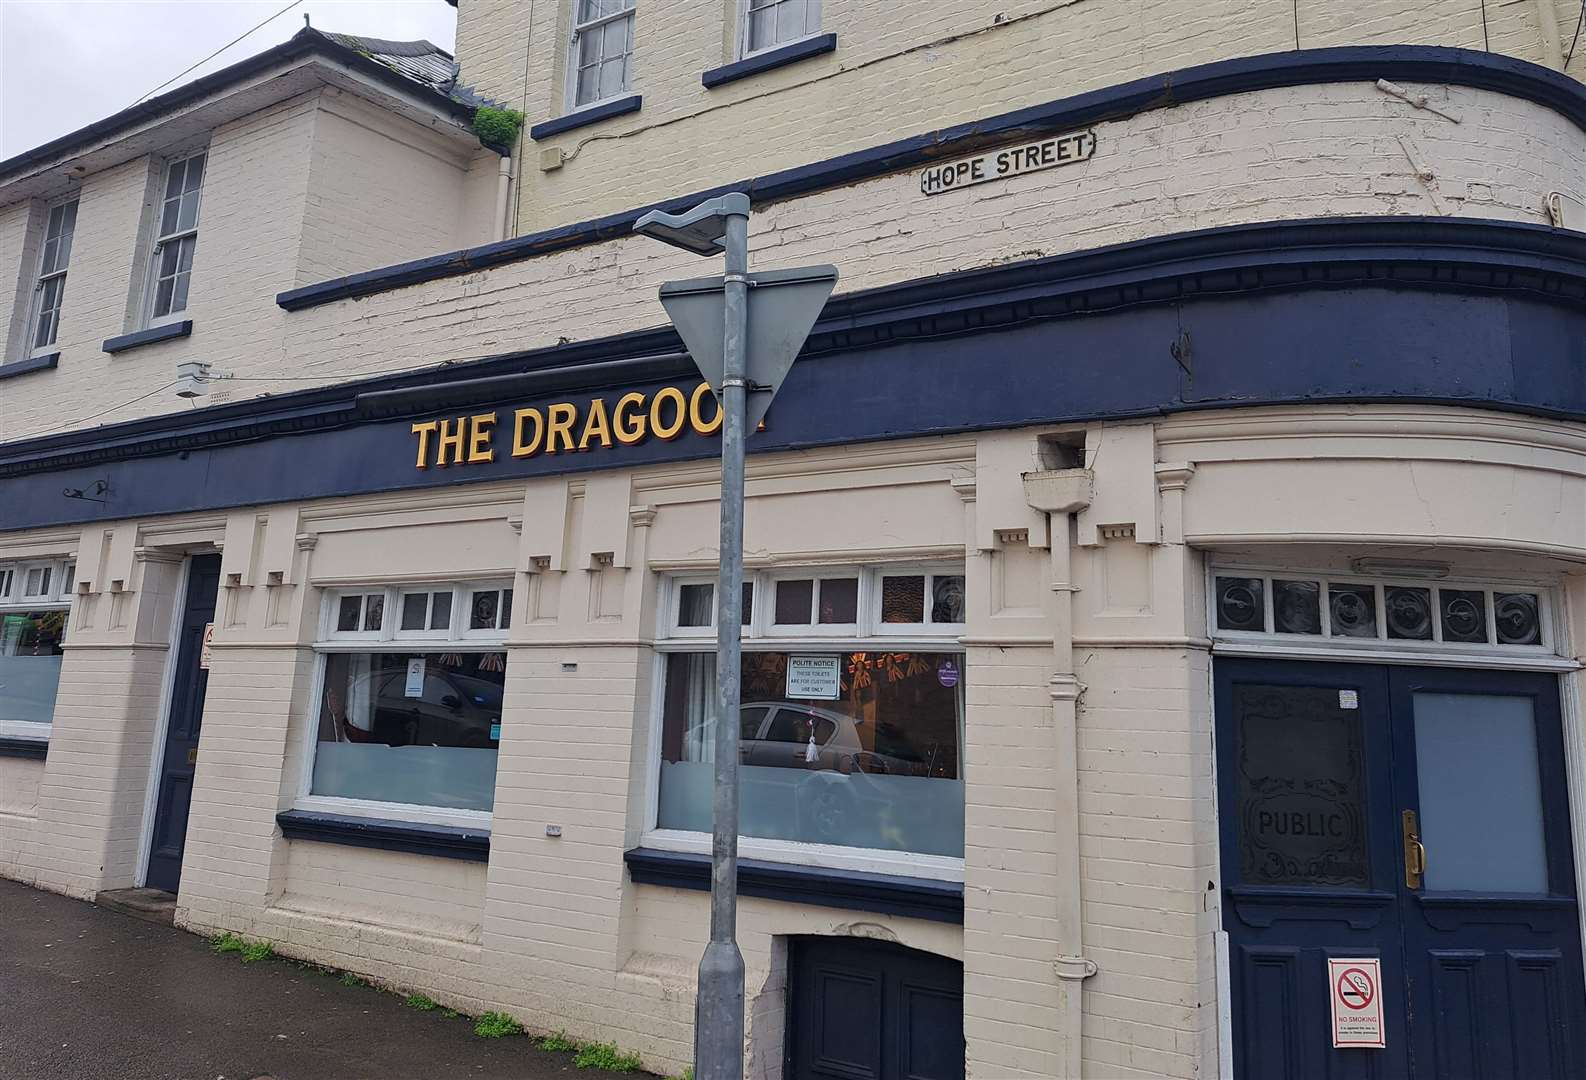 The Dragoon shut earlier this year